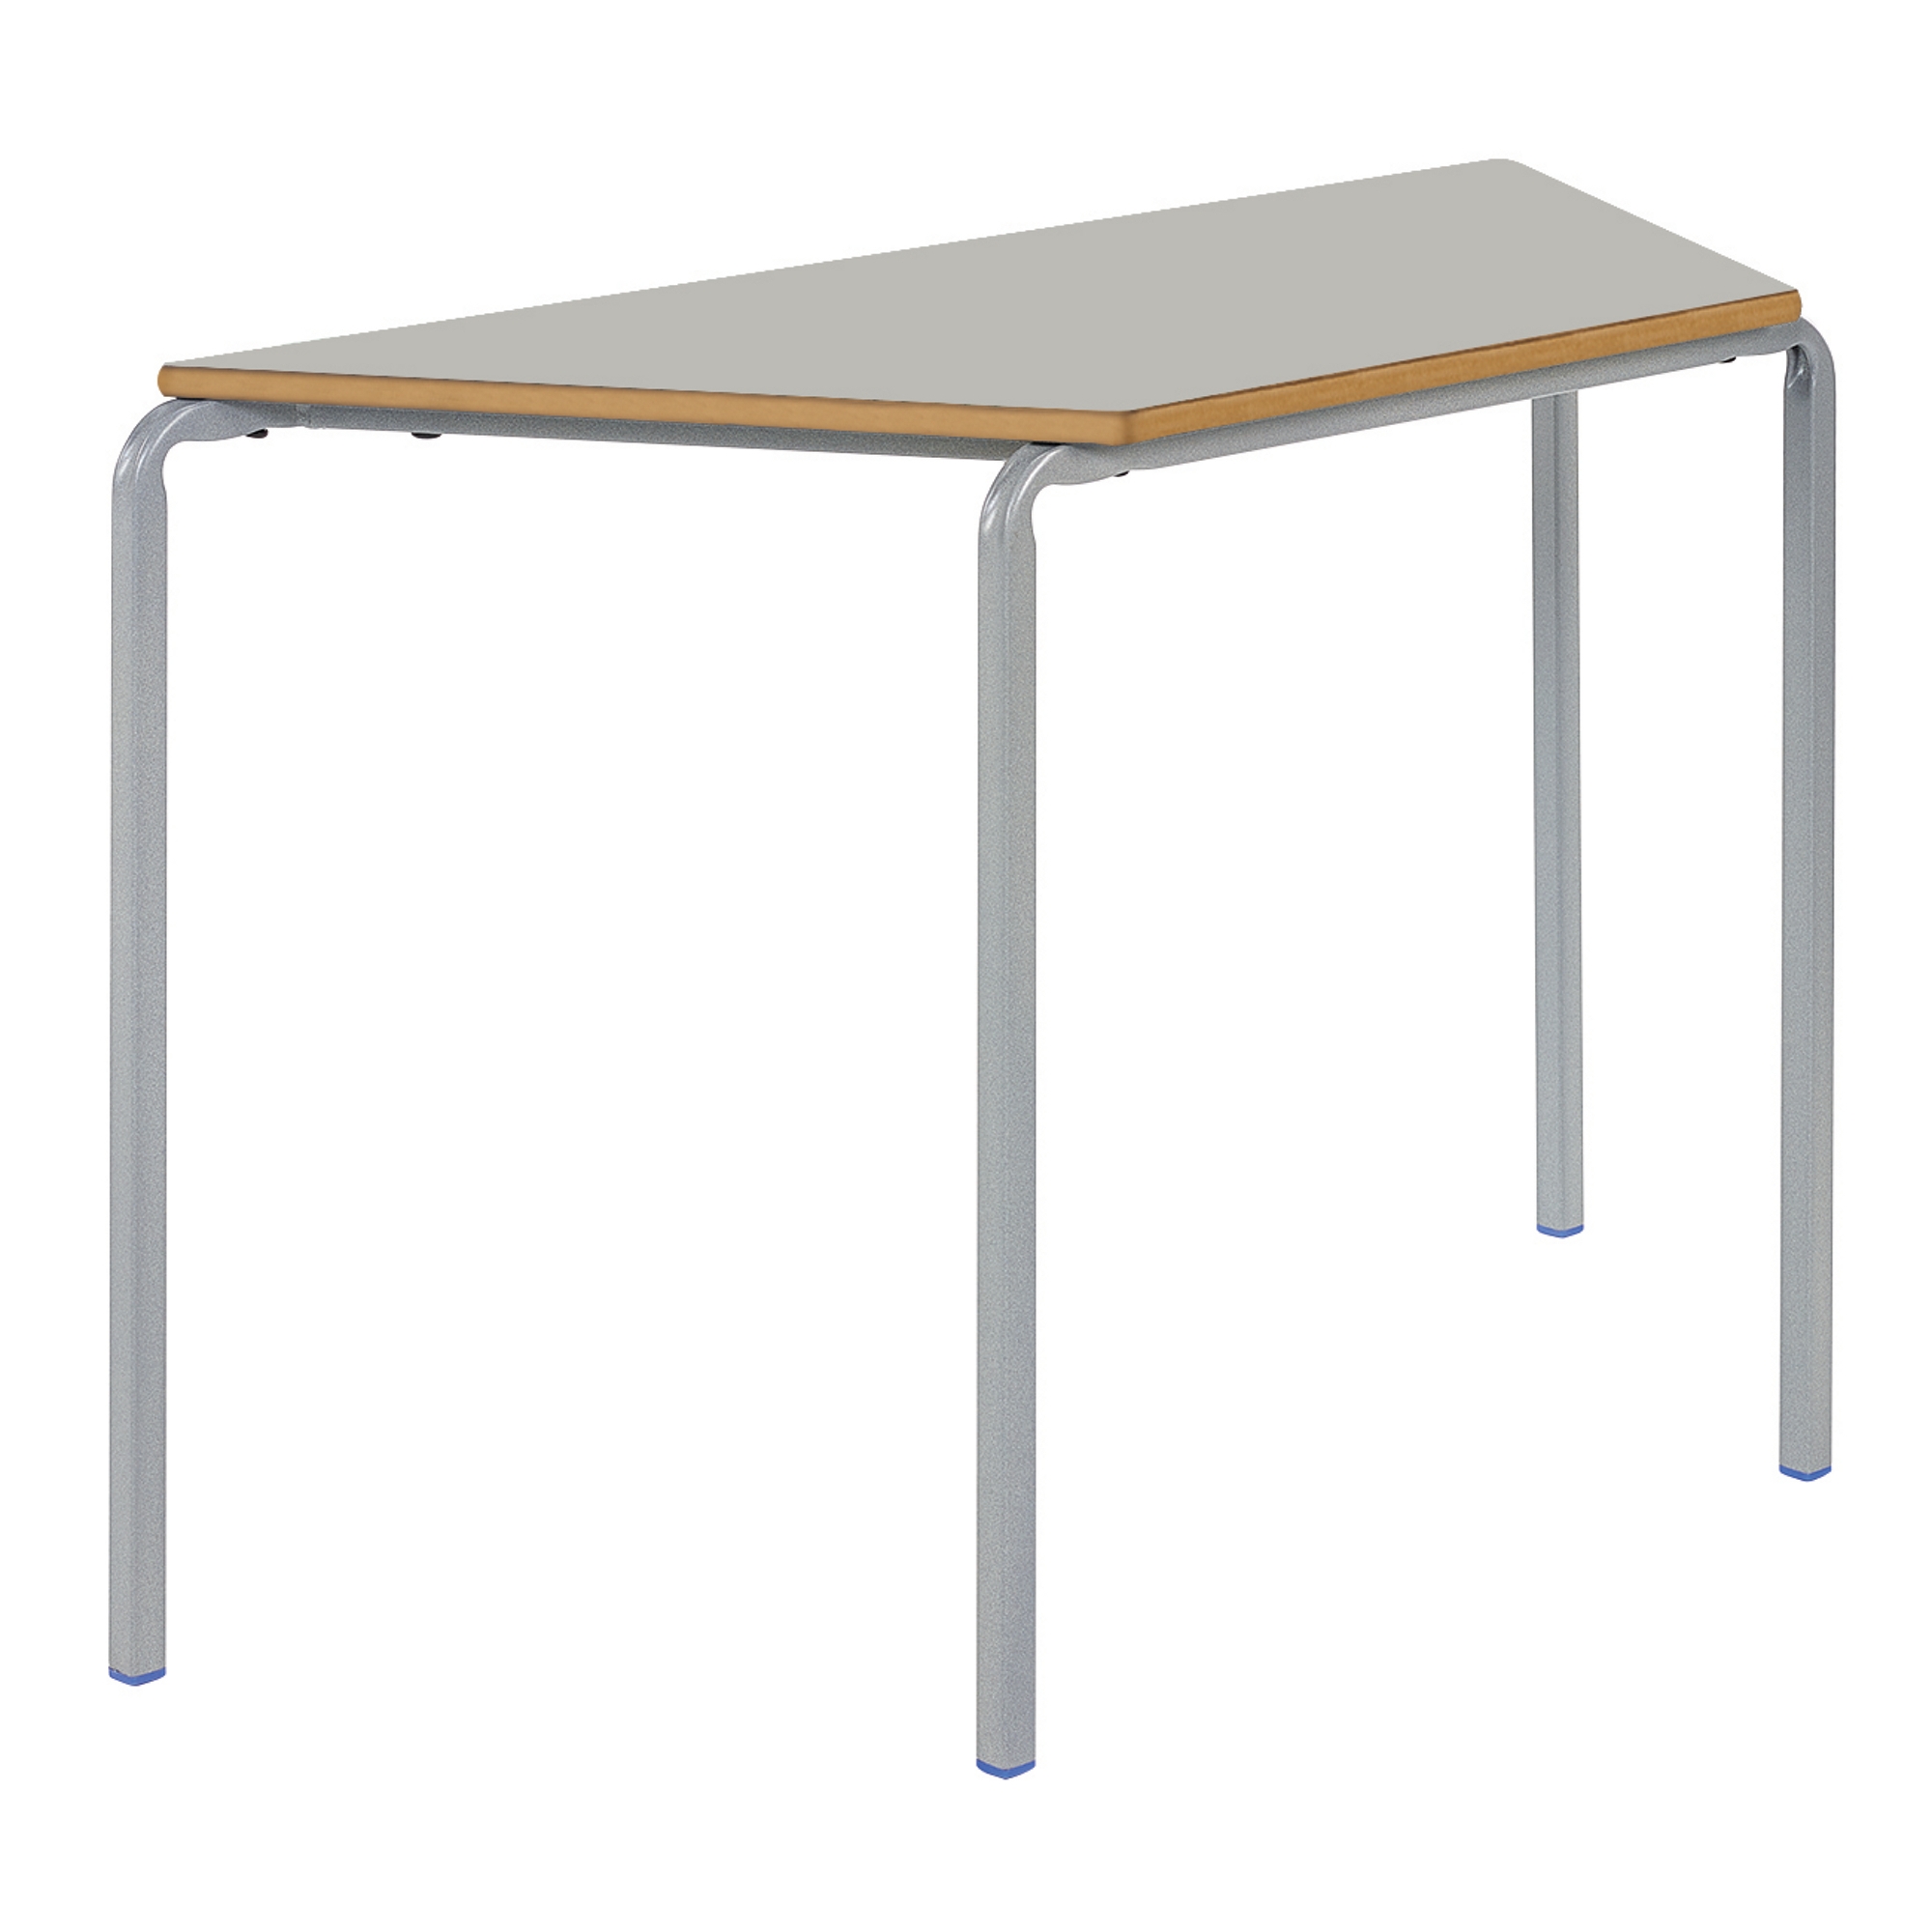 Classmates Trapezoidal Crushed Bent Classroom Table - 1100 x 550 x 460mm - Grey